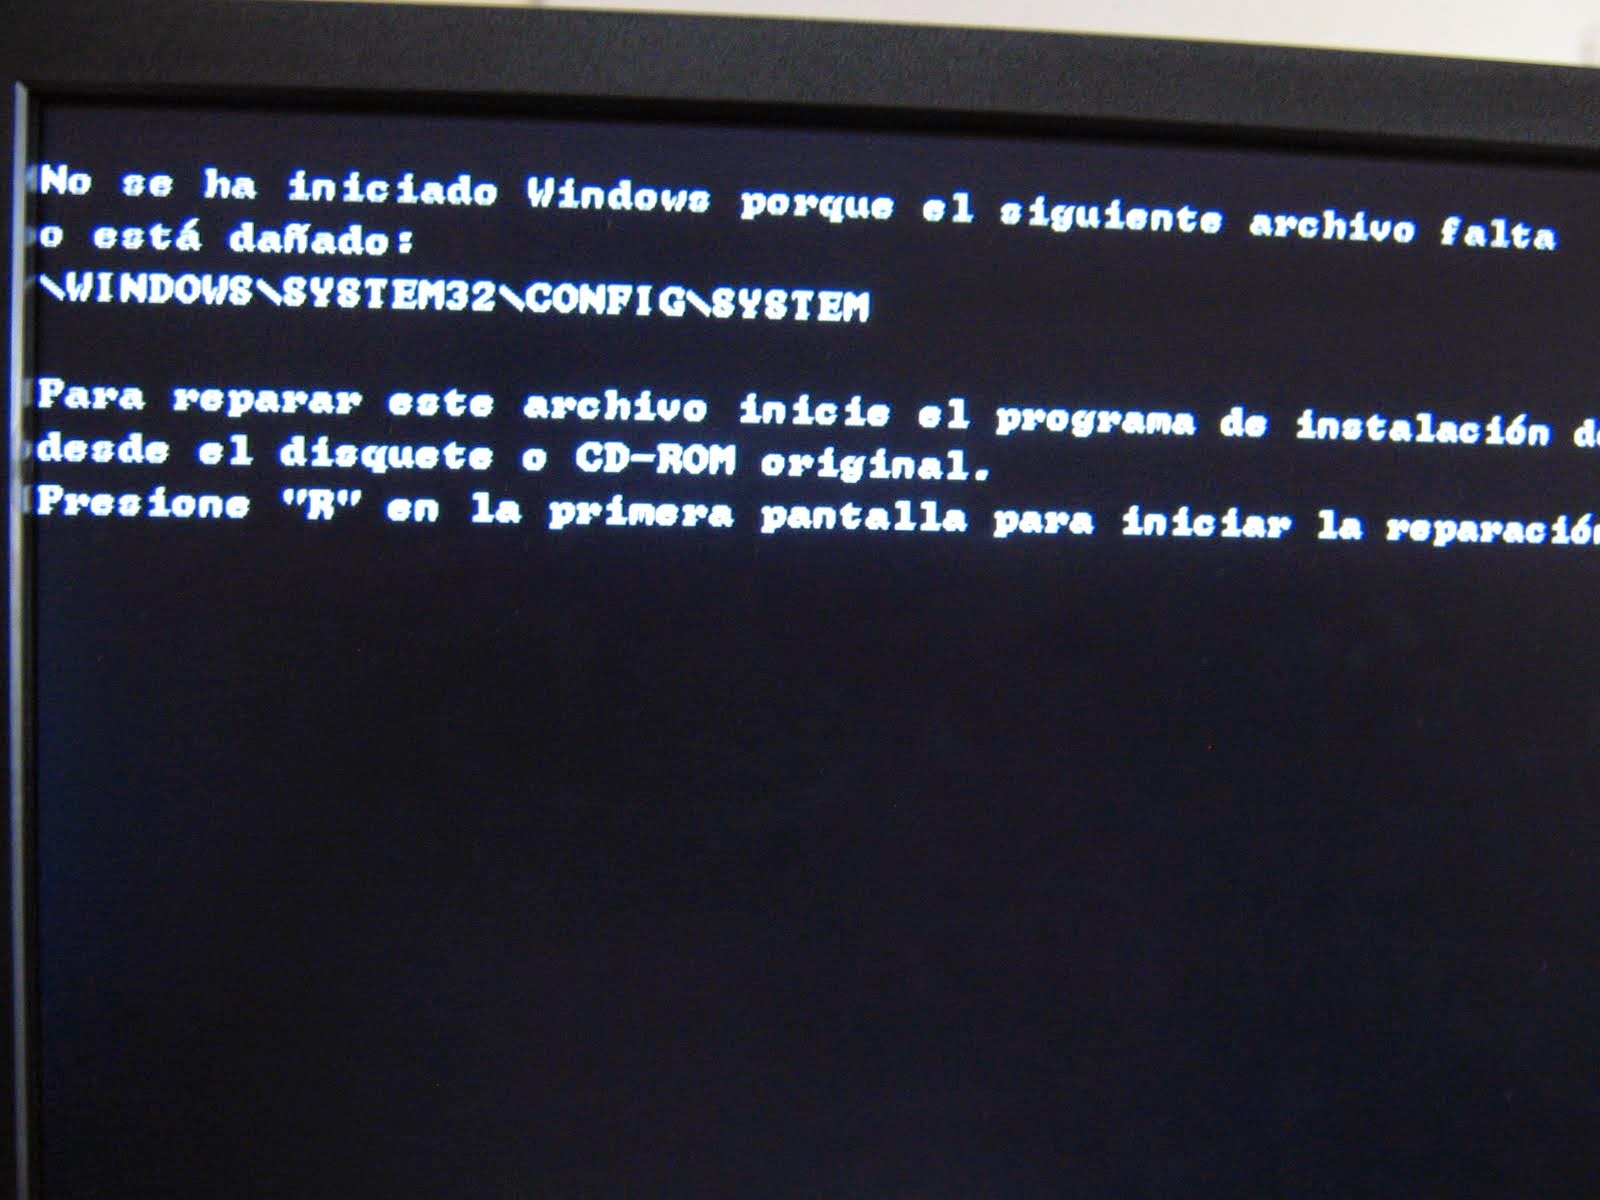 Windows XP system32 config System. Файл Windows system32 config System не удалось запустить виндовс 7. Ошибка 32 виндовс. Windows/system32/config/System как восстановить ошибку. Error code 32